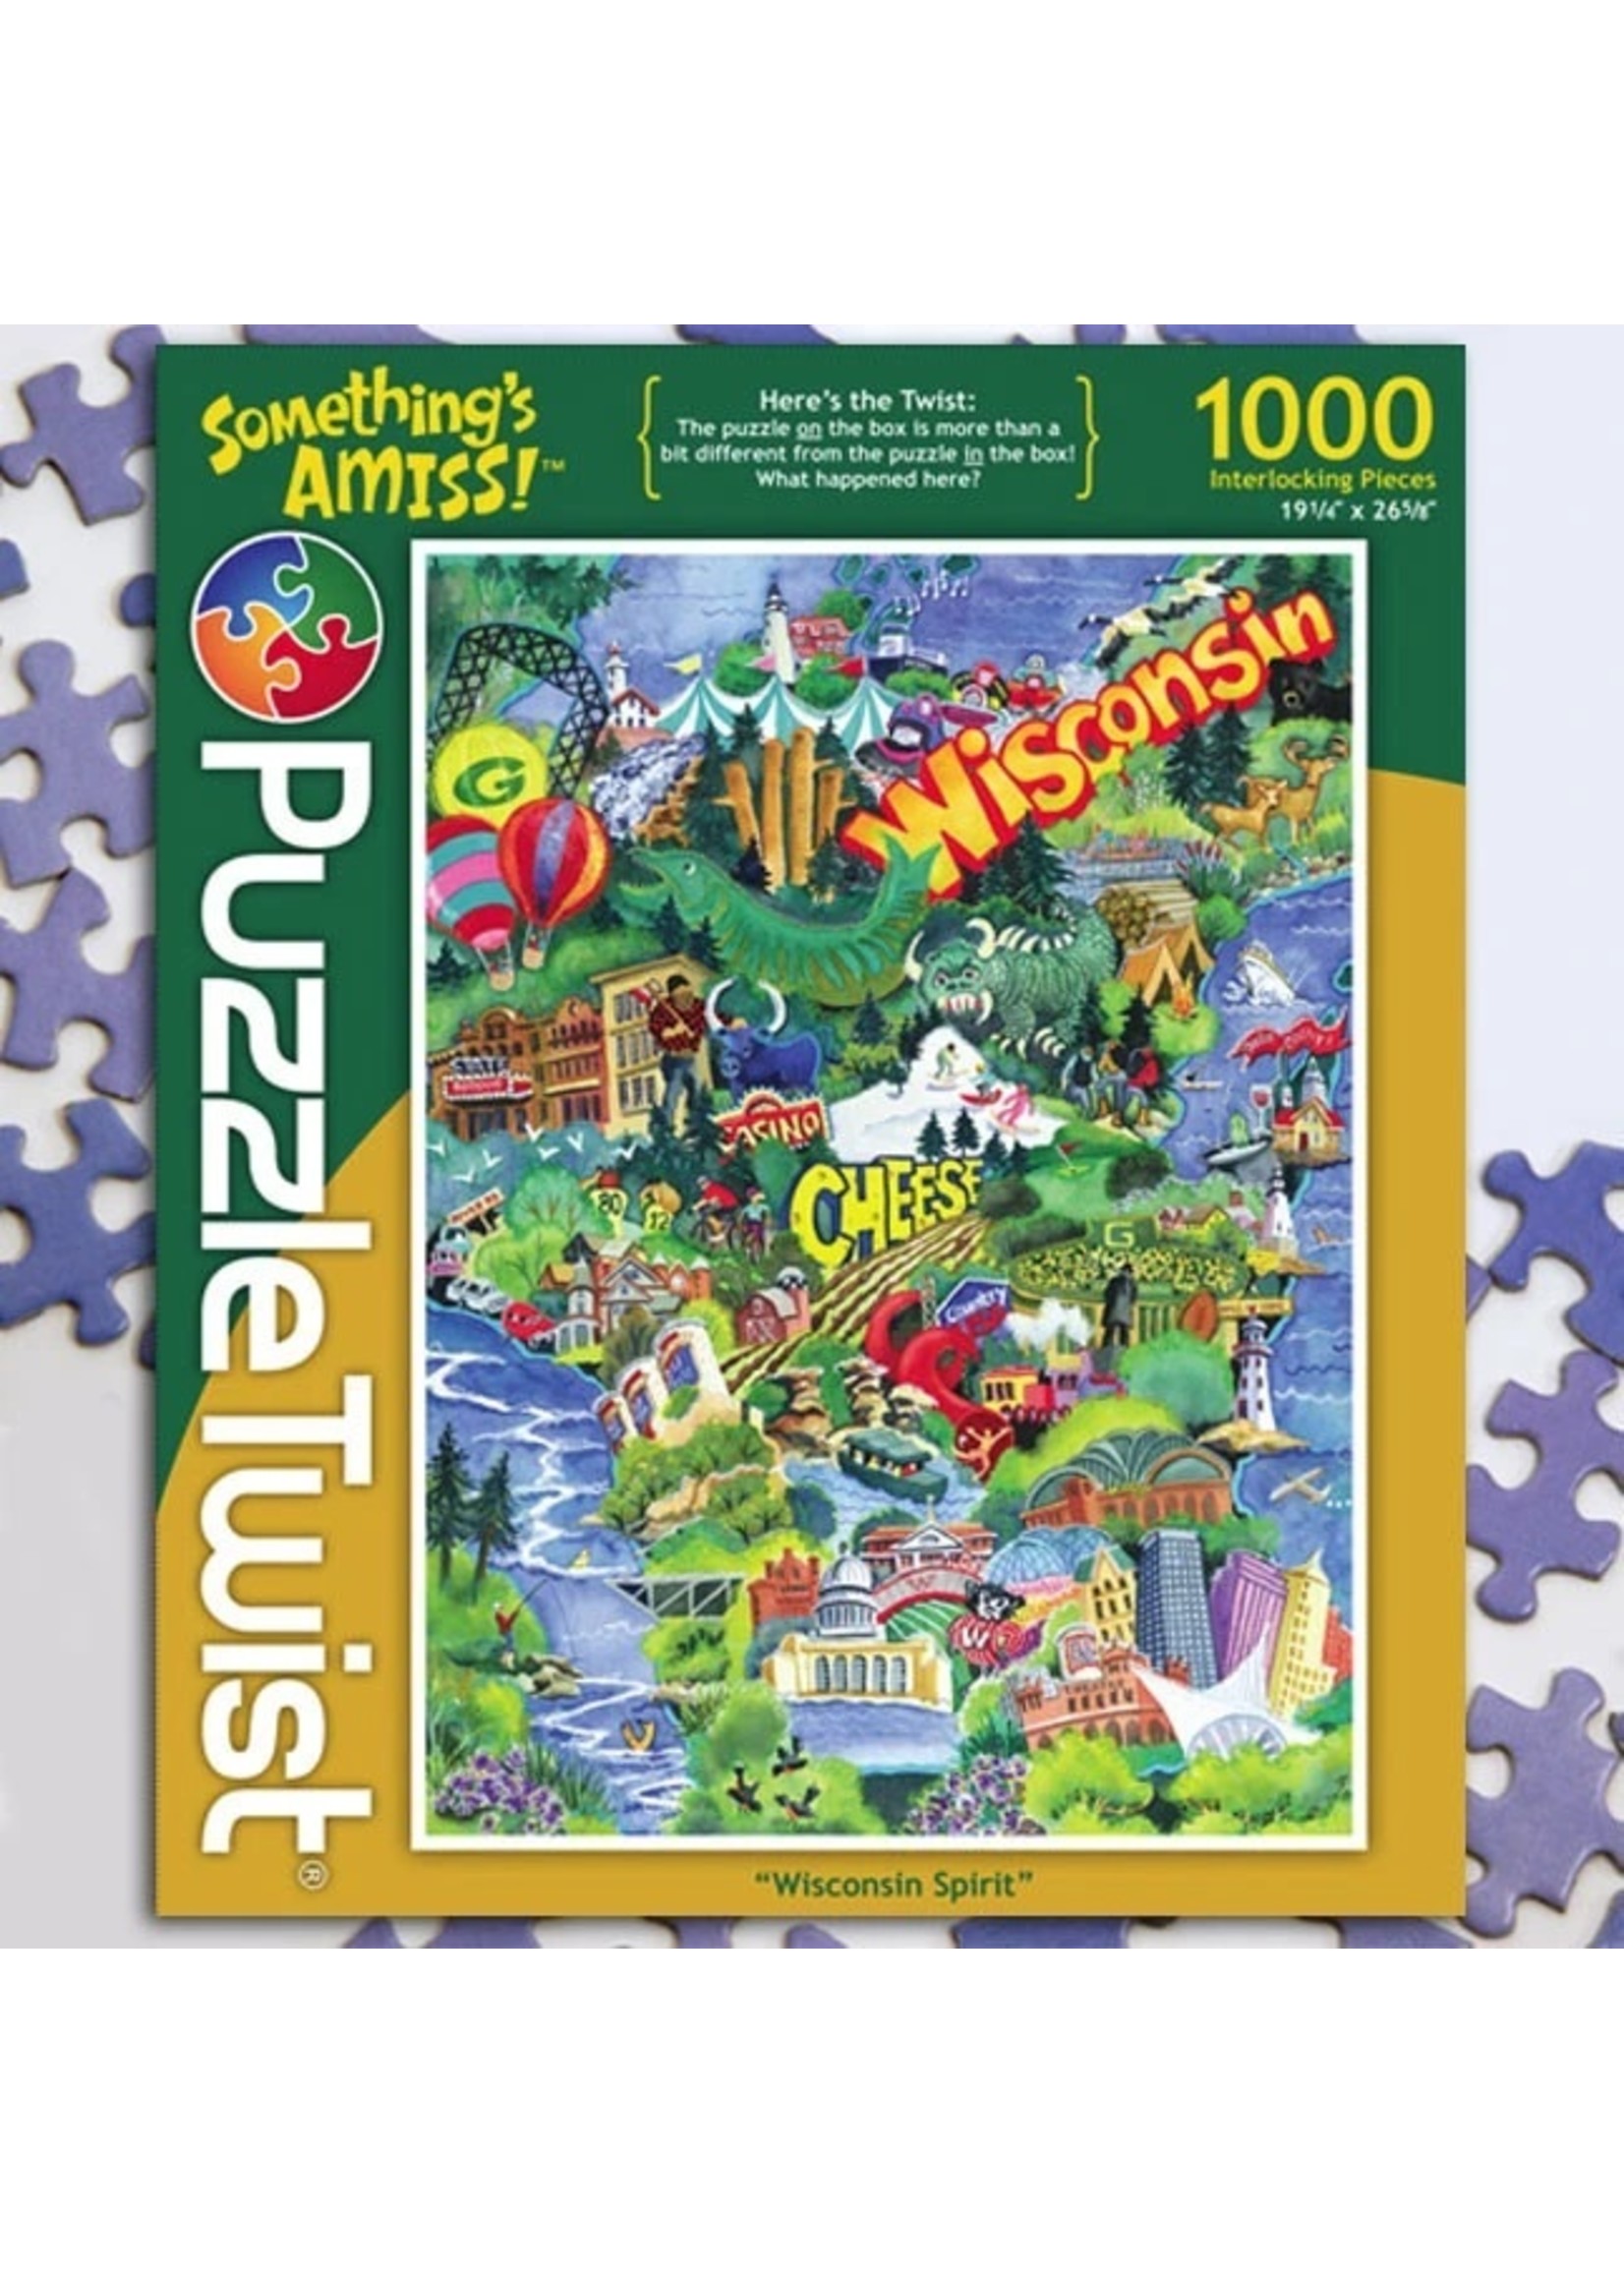 Puzzle Twist Wisconsin Spirit - 1000 Piece Puzzle